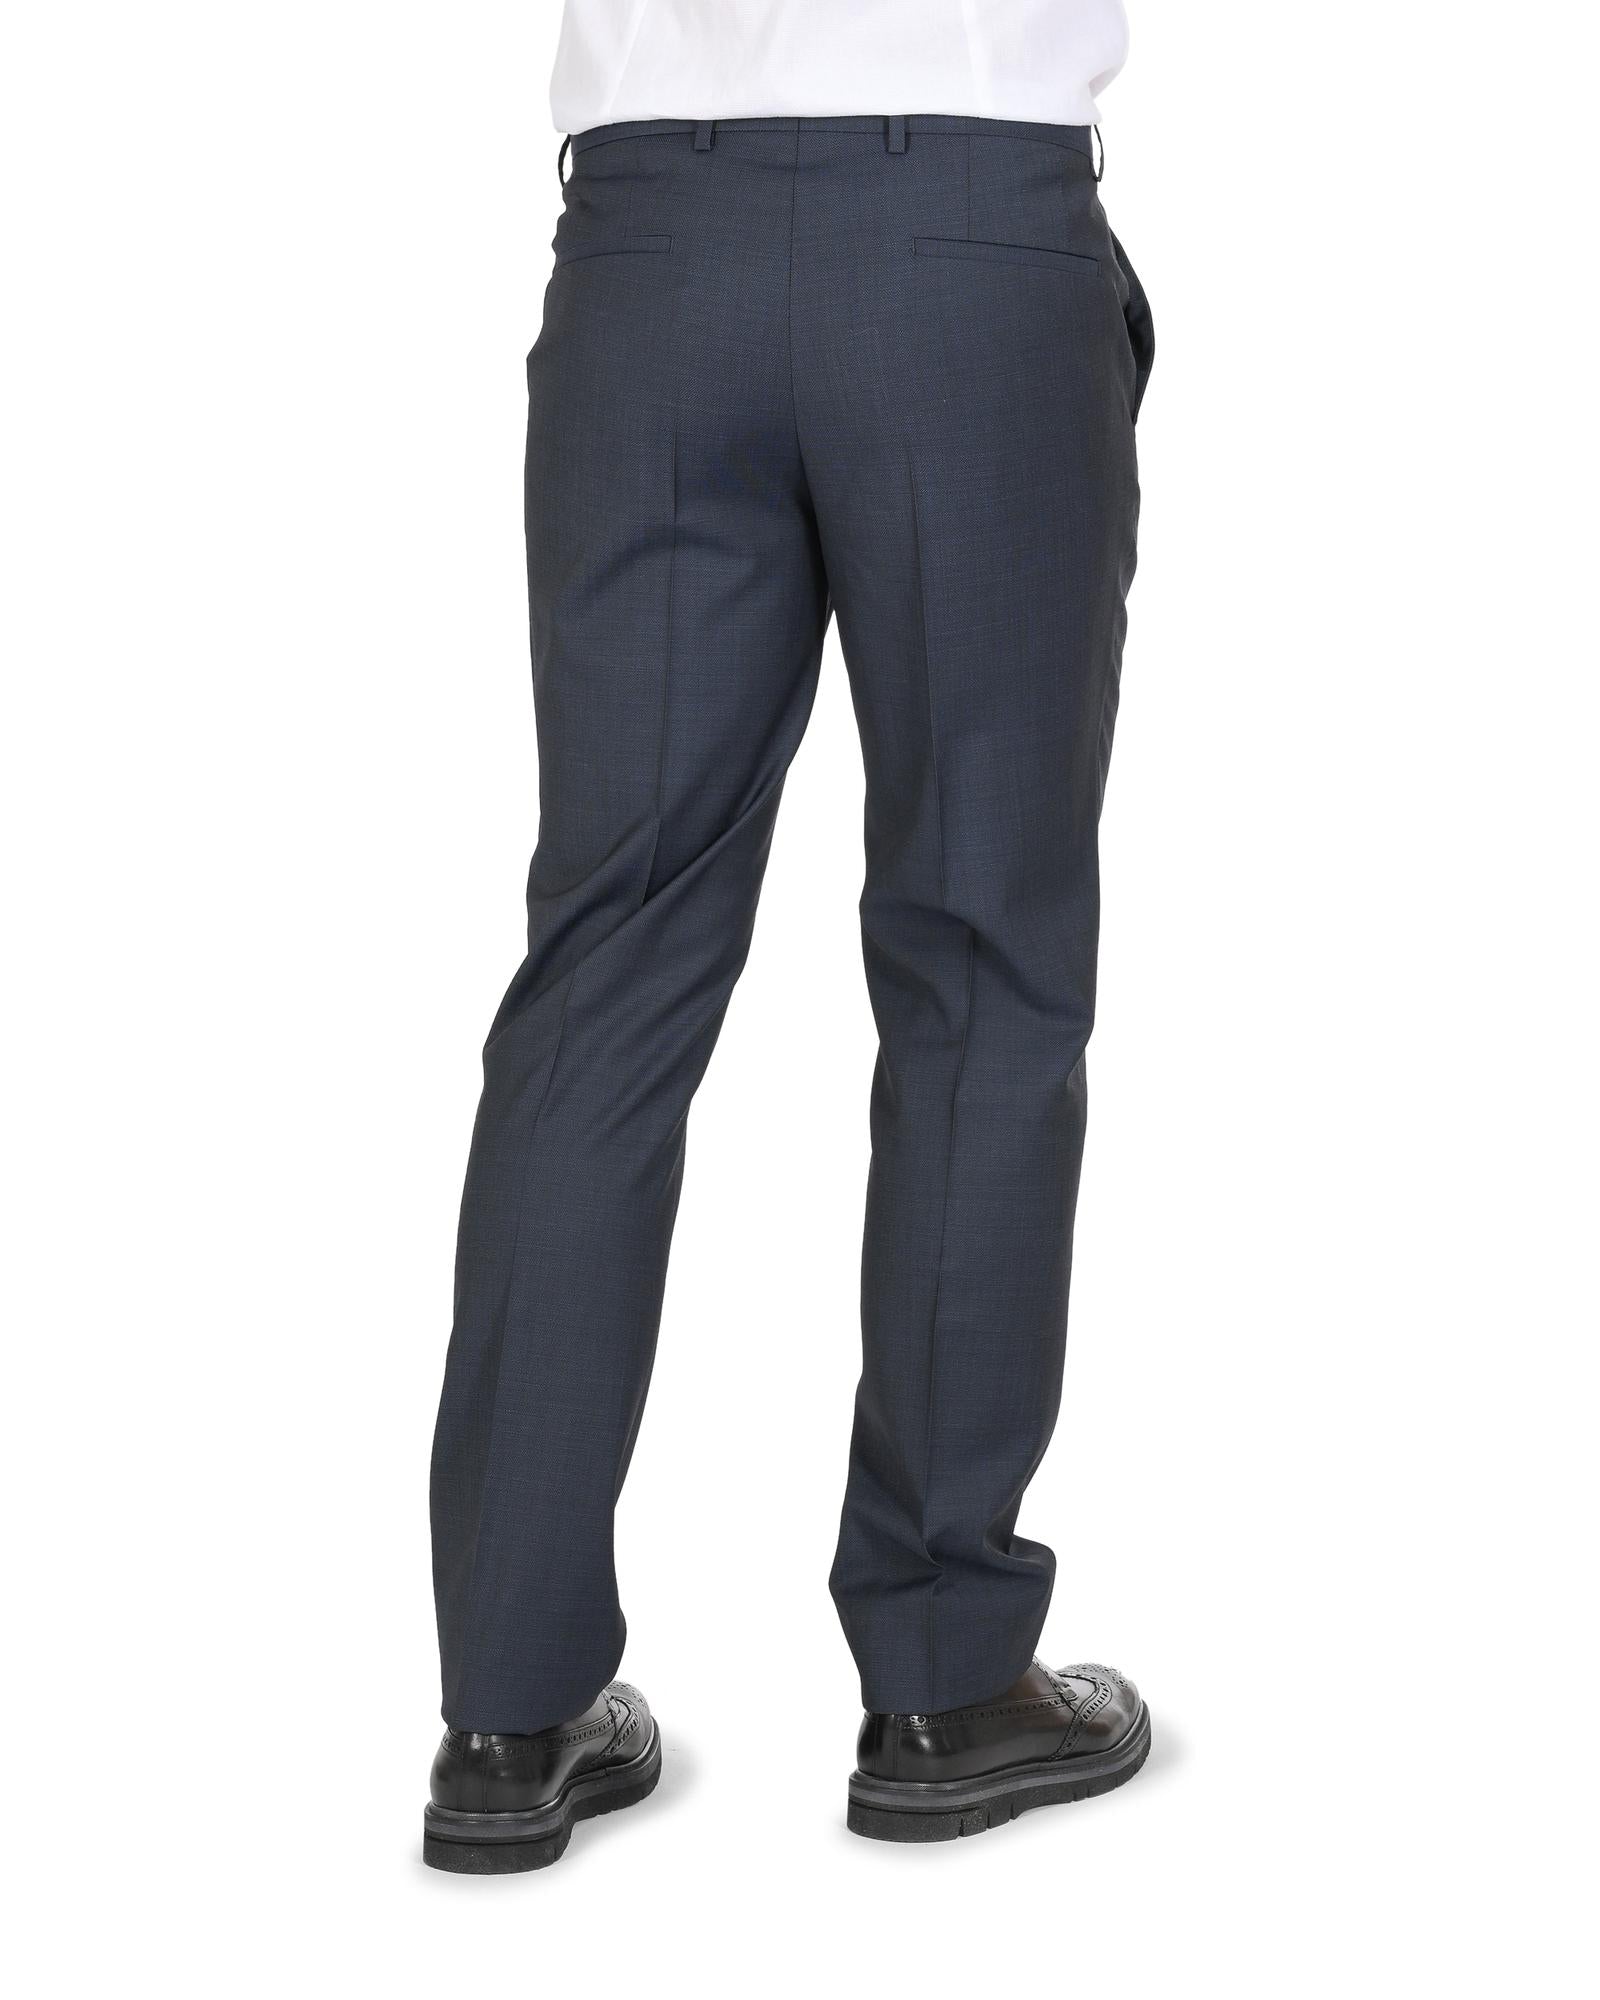 Comfort Hugo Boss Men'S Dark Blue/Grey Virgin Wool Trousers